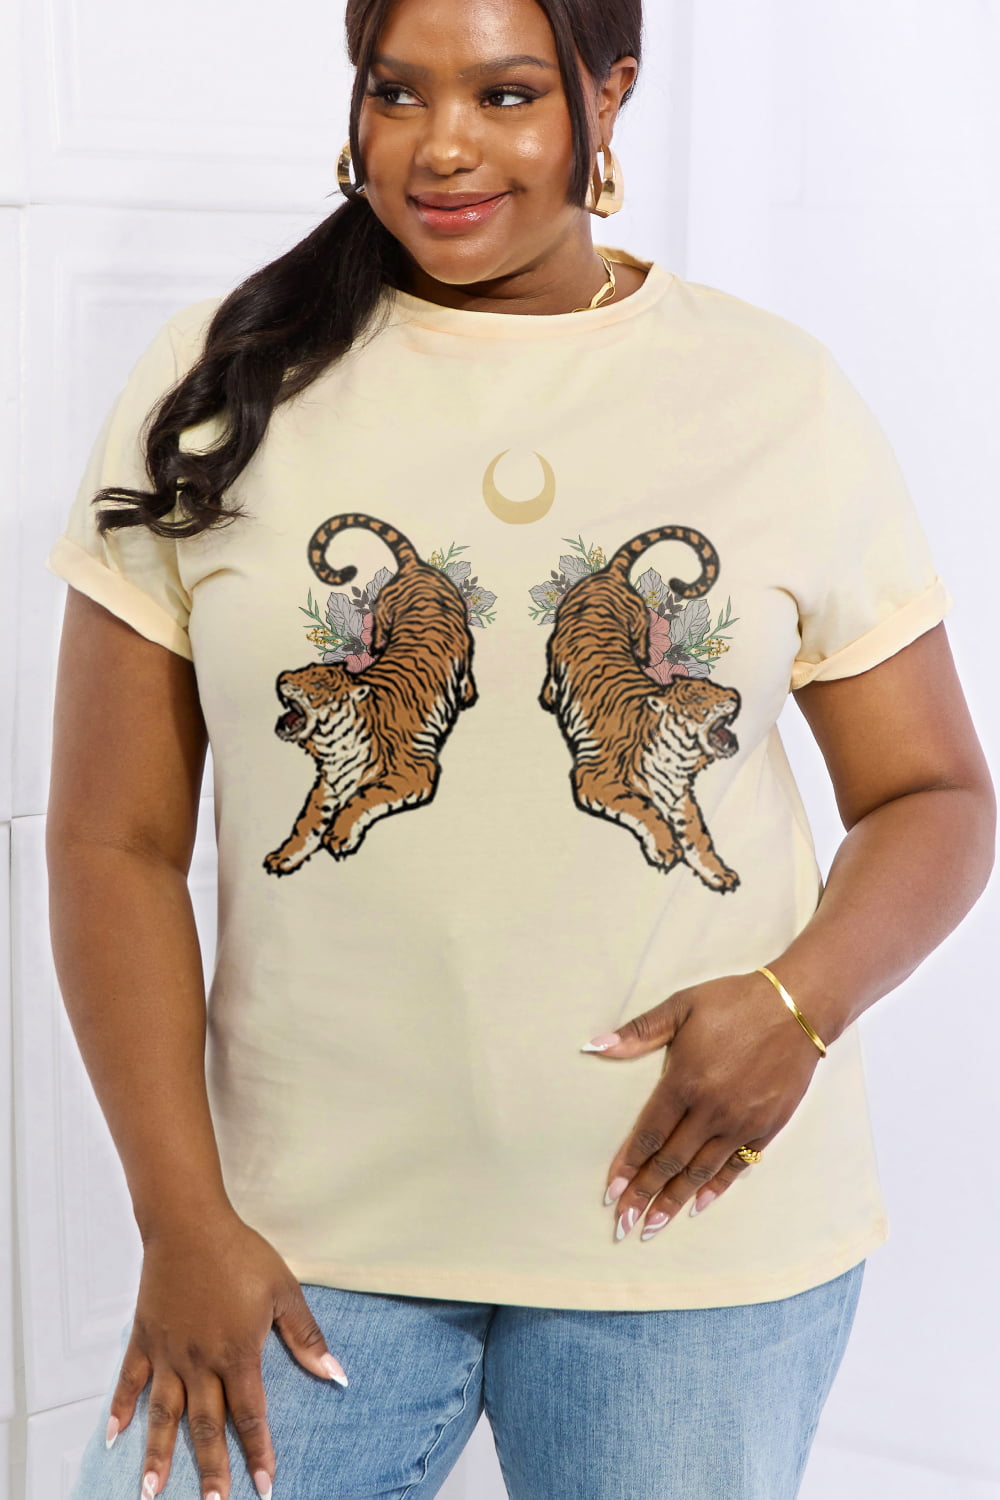 Simply Love Full Size Tiger Graphic Cotton Tee - TiffanyzKlozet